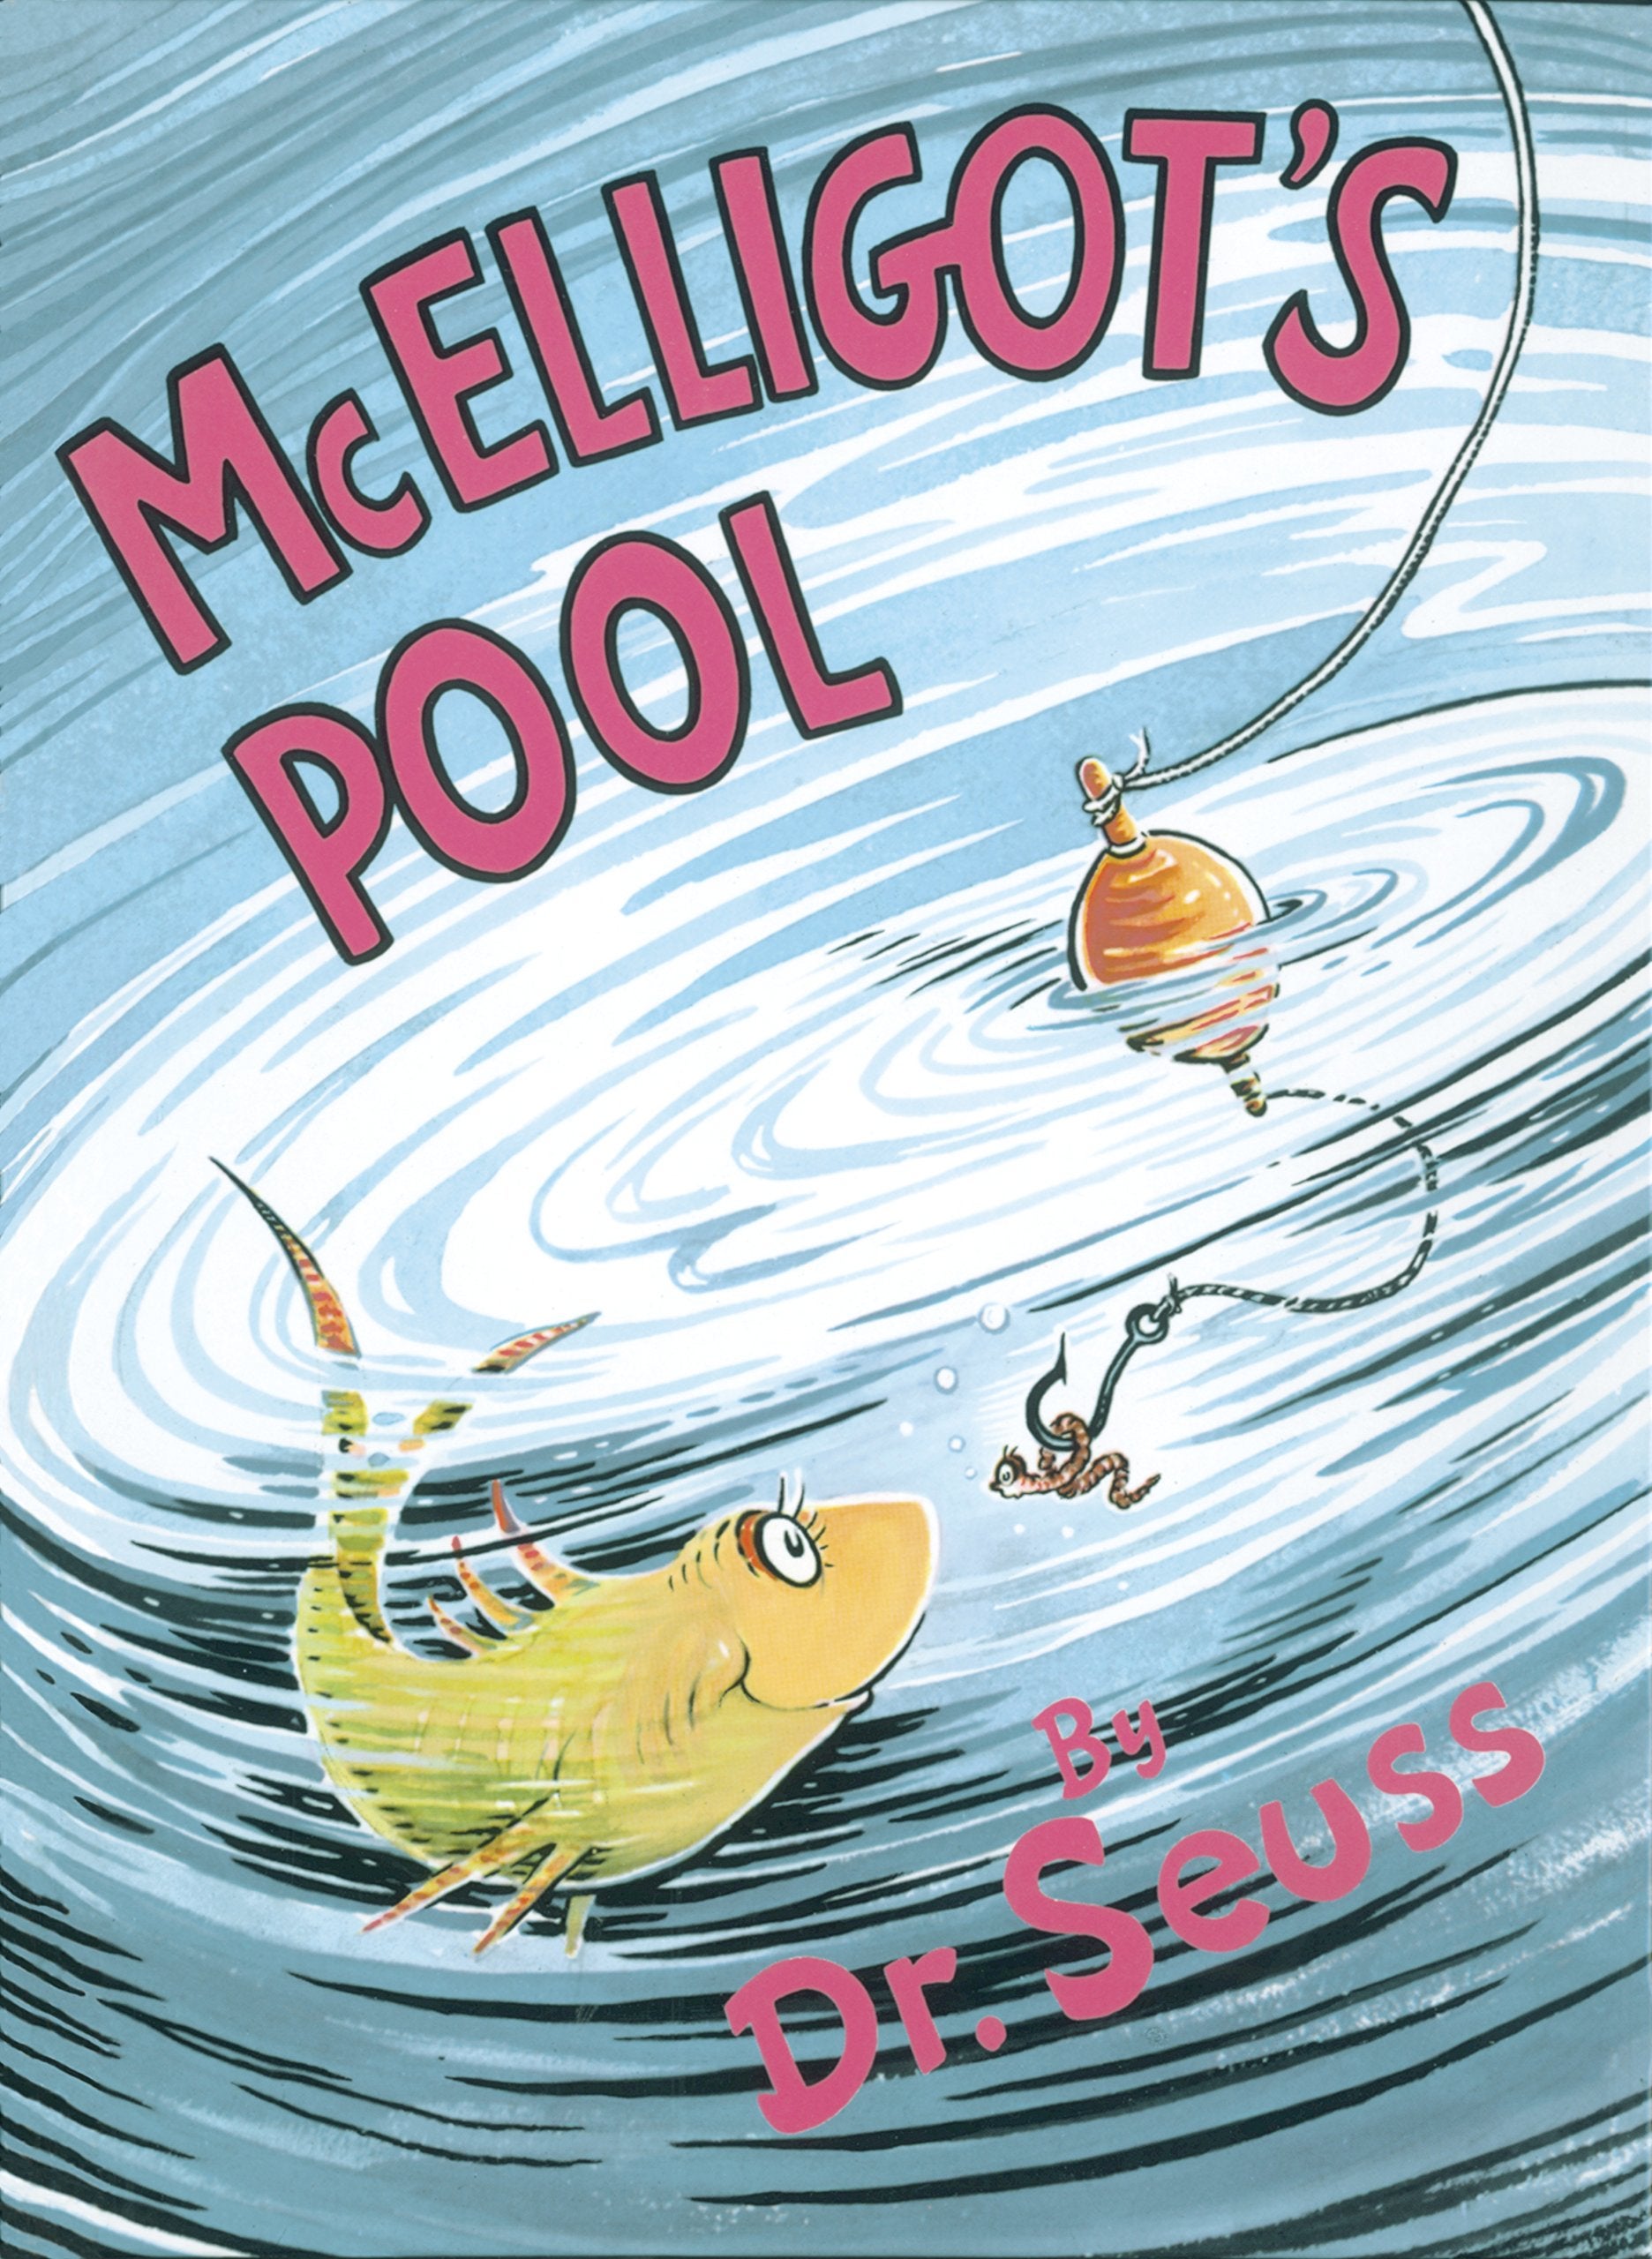 mcelligot's pool cover